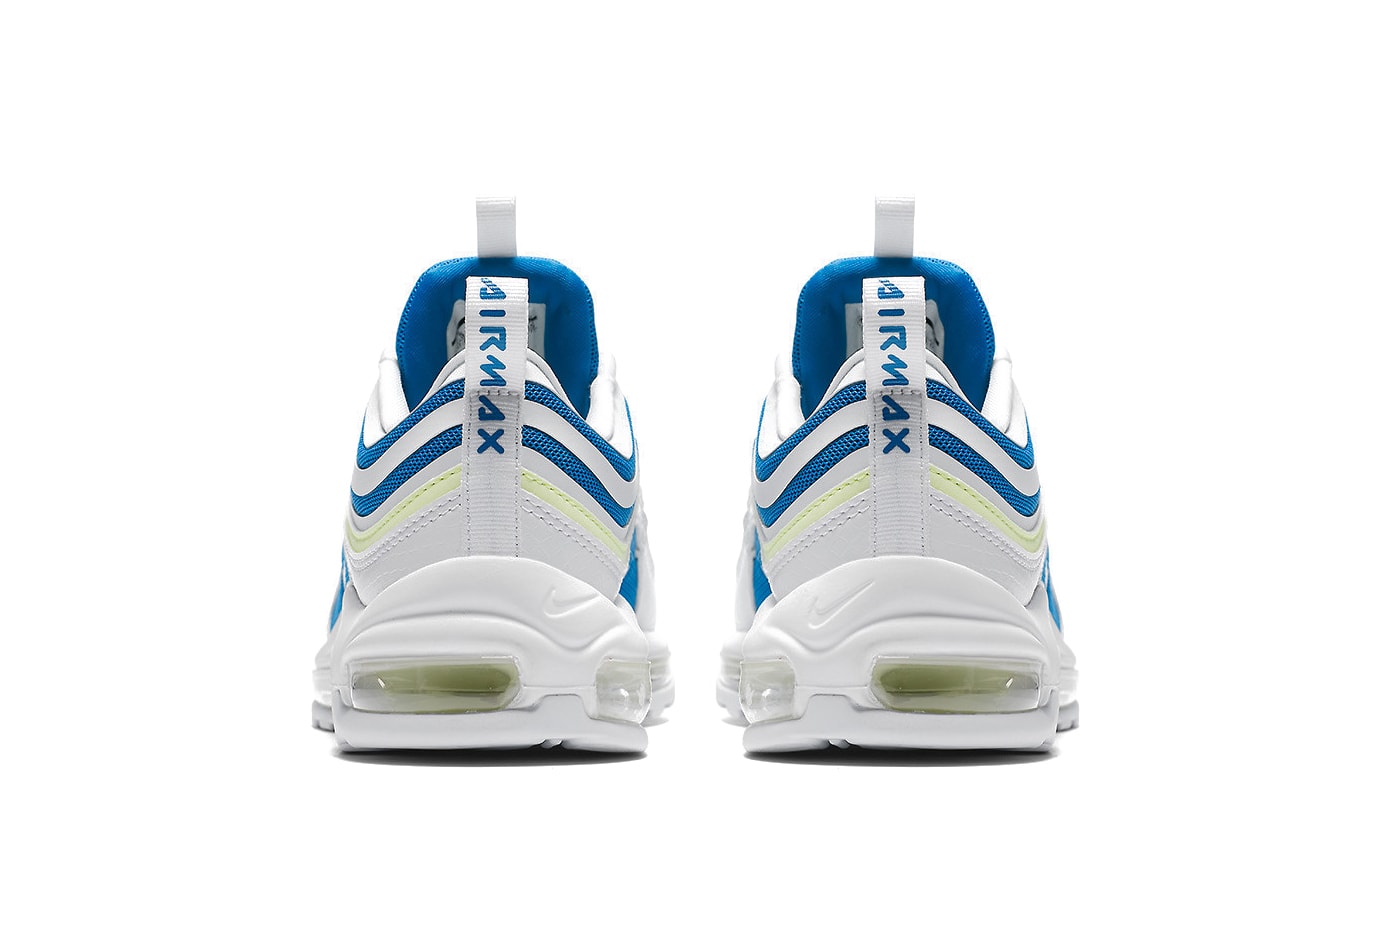 Nike Air Max 97 Ultra in Blue/White "Sprite" Royal Blue Sneaker Silhouette Shoe Future Release